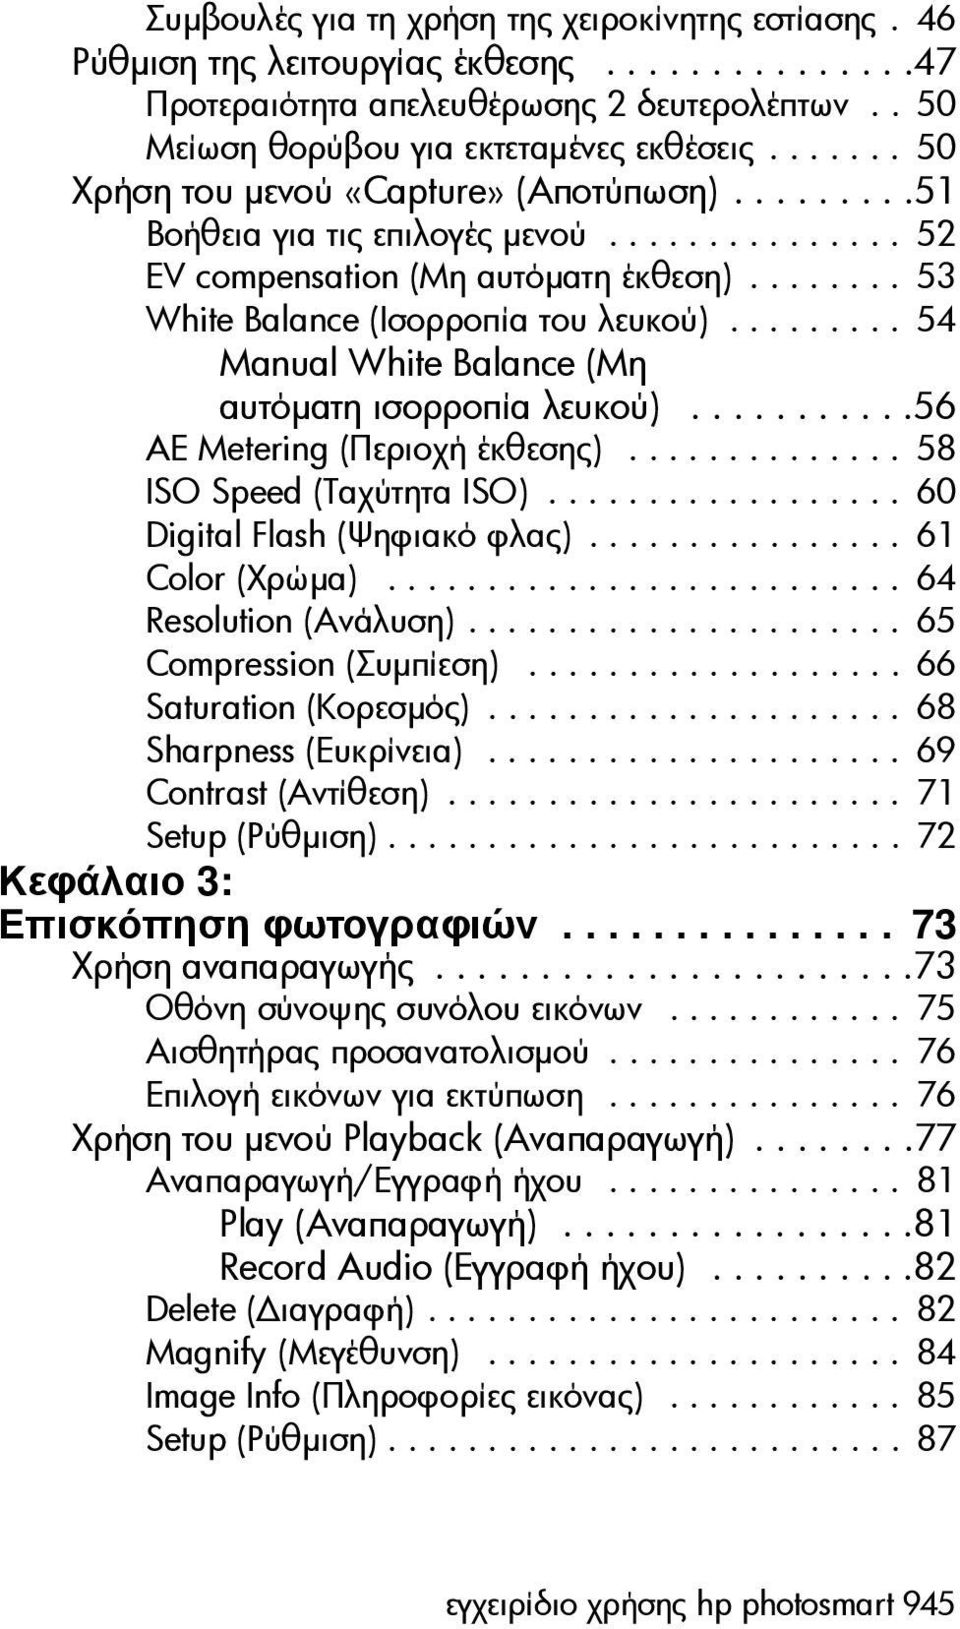 ........ 54 Manual White Balance (Μη αυτόµατη ισορροπία λευκού)...........56 AE Metering (Περιοχή έκθεσης).............. 58 ISO Speed (Ταχύτητα ISO).................. 60 Digital Flash (Ψηφιακό φλας).